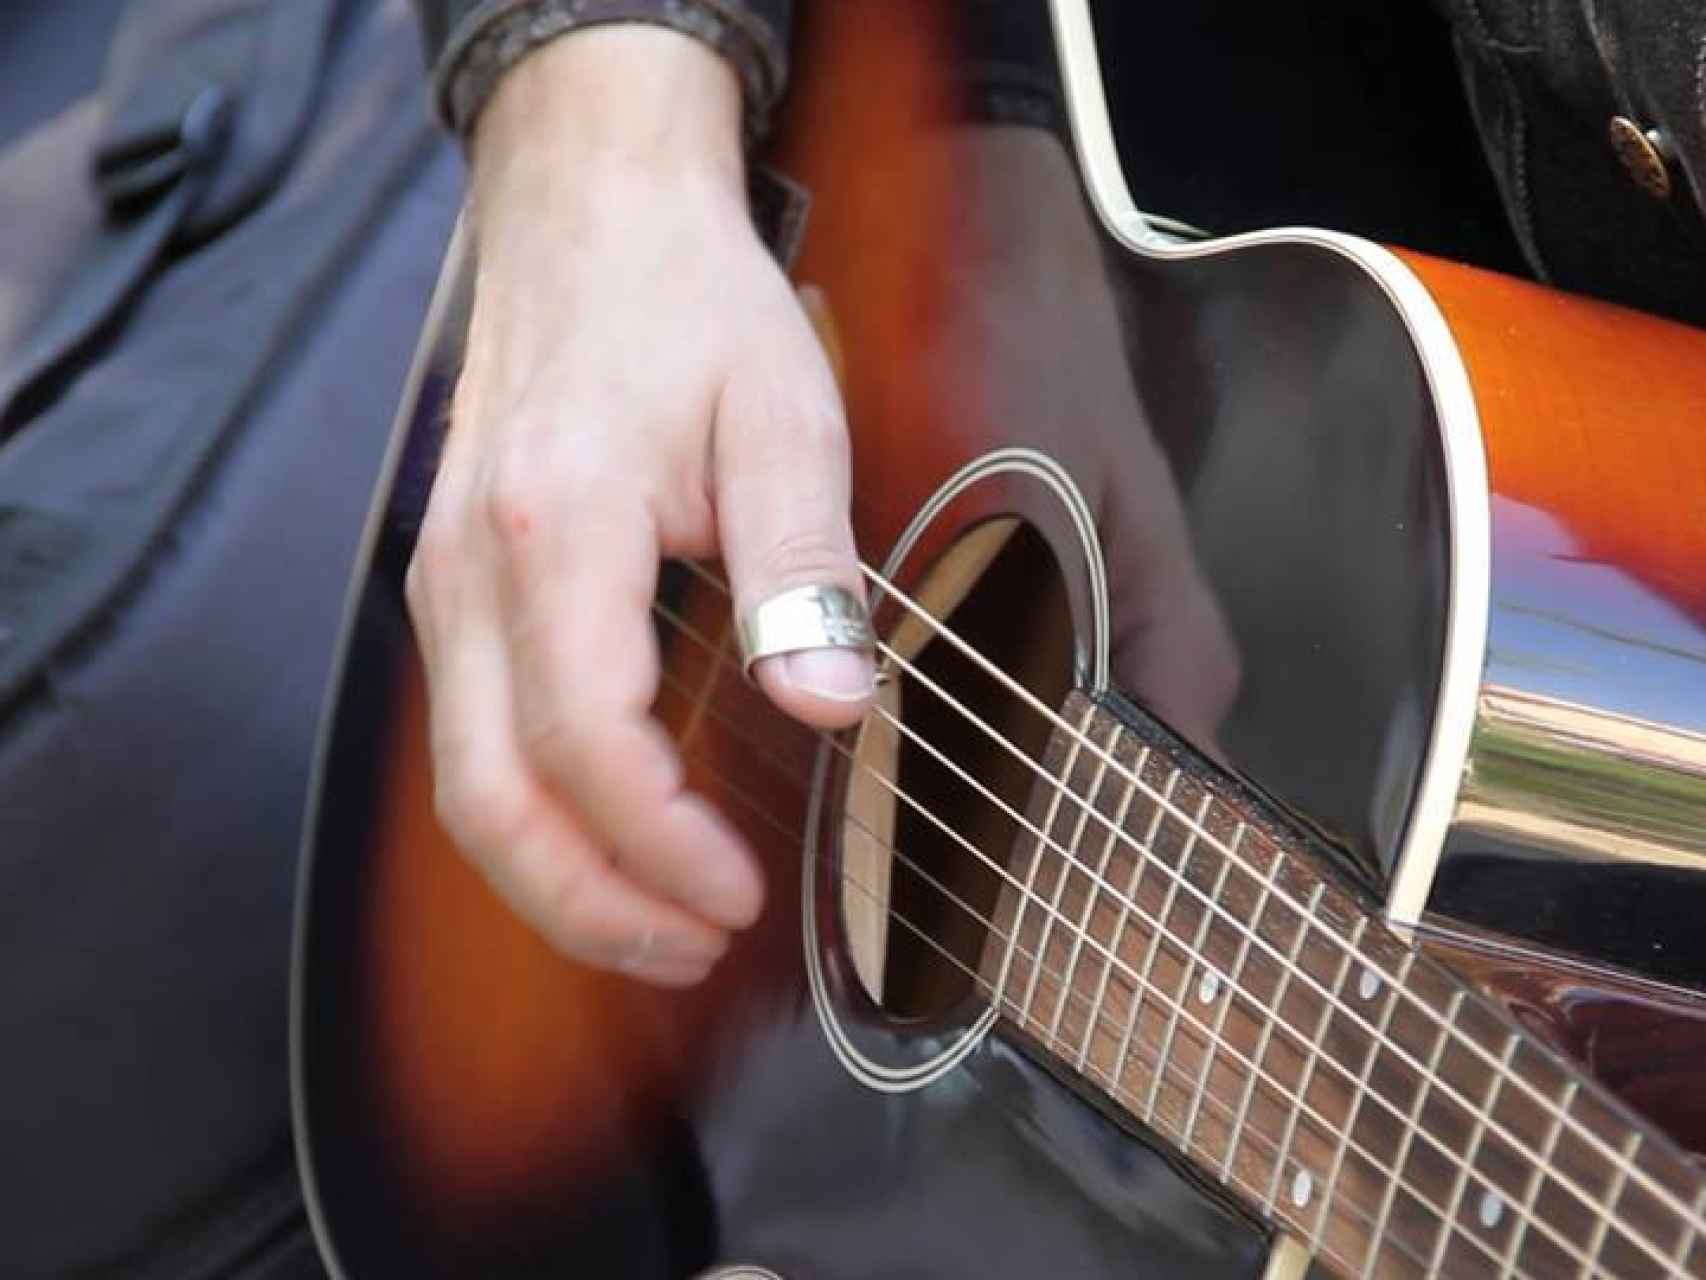 Guitarra de Hendrik, en medio del rodaje del documental.